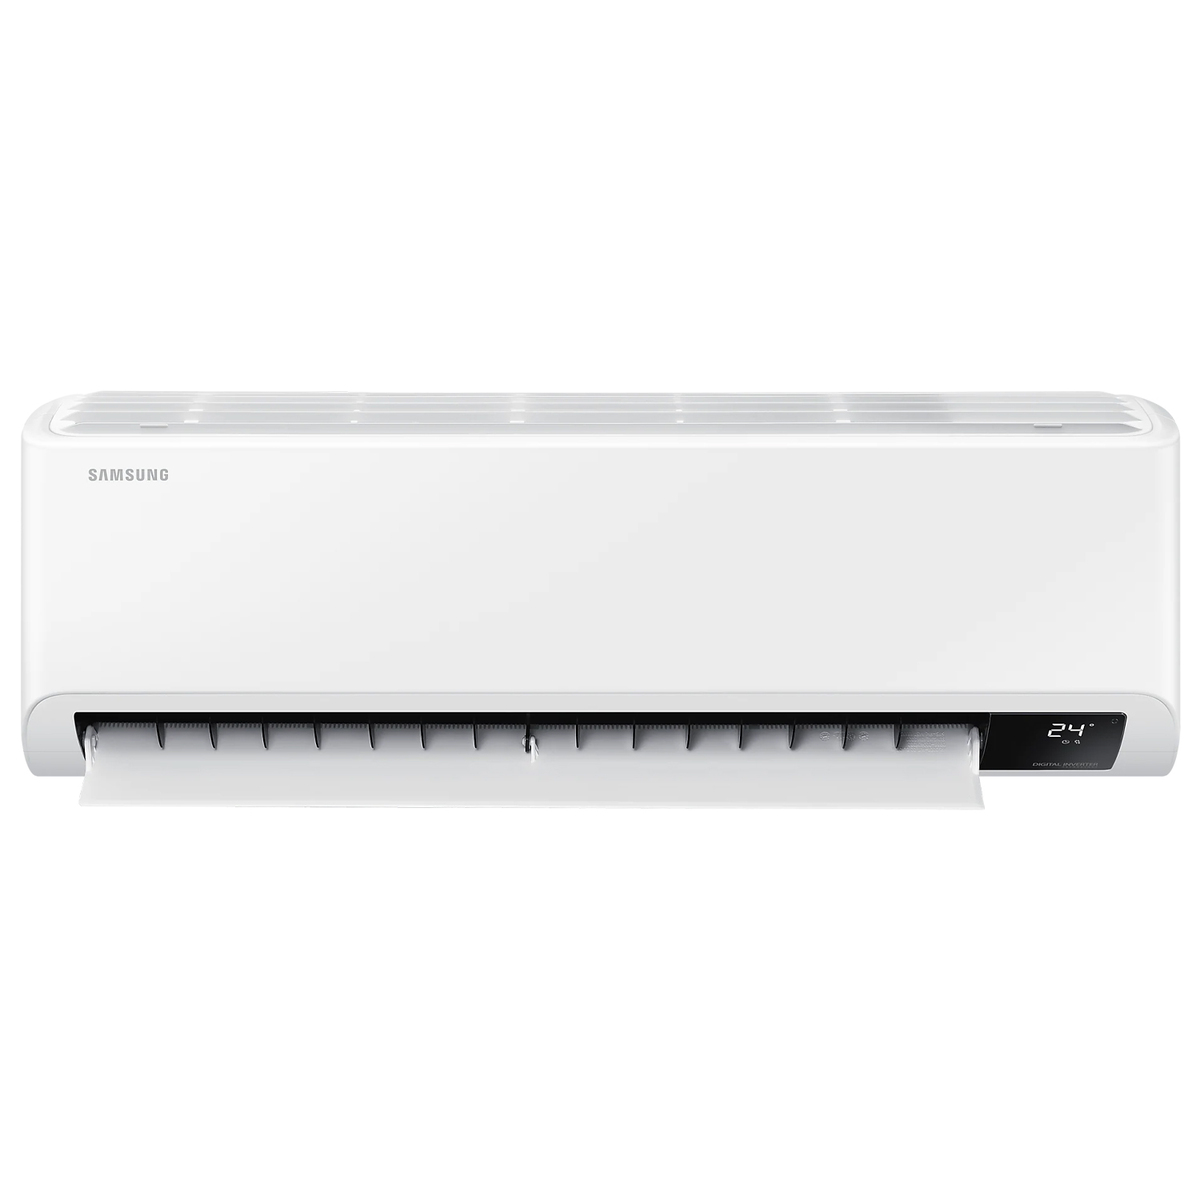 Samsung Inverter Air Conditioner AR18BY4YAWK 1.5 Ton 4*